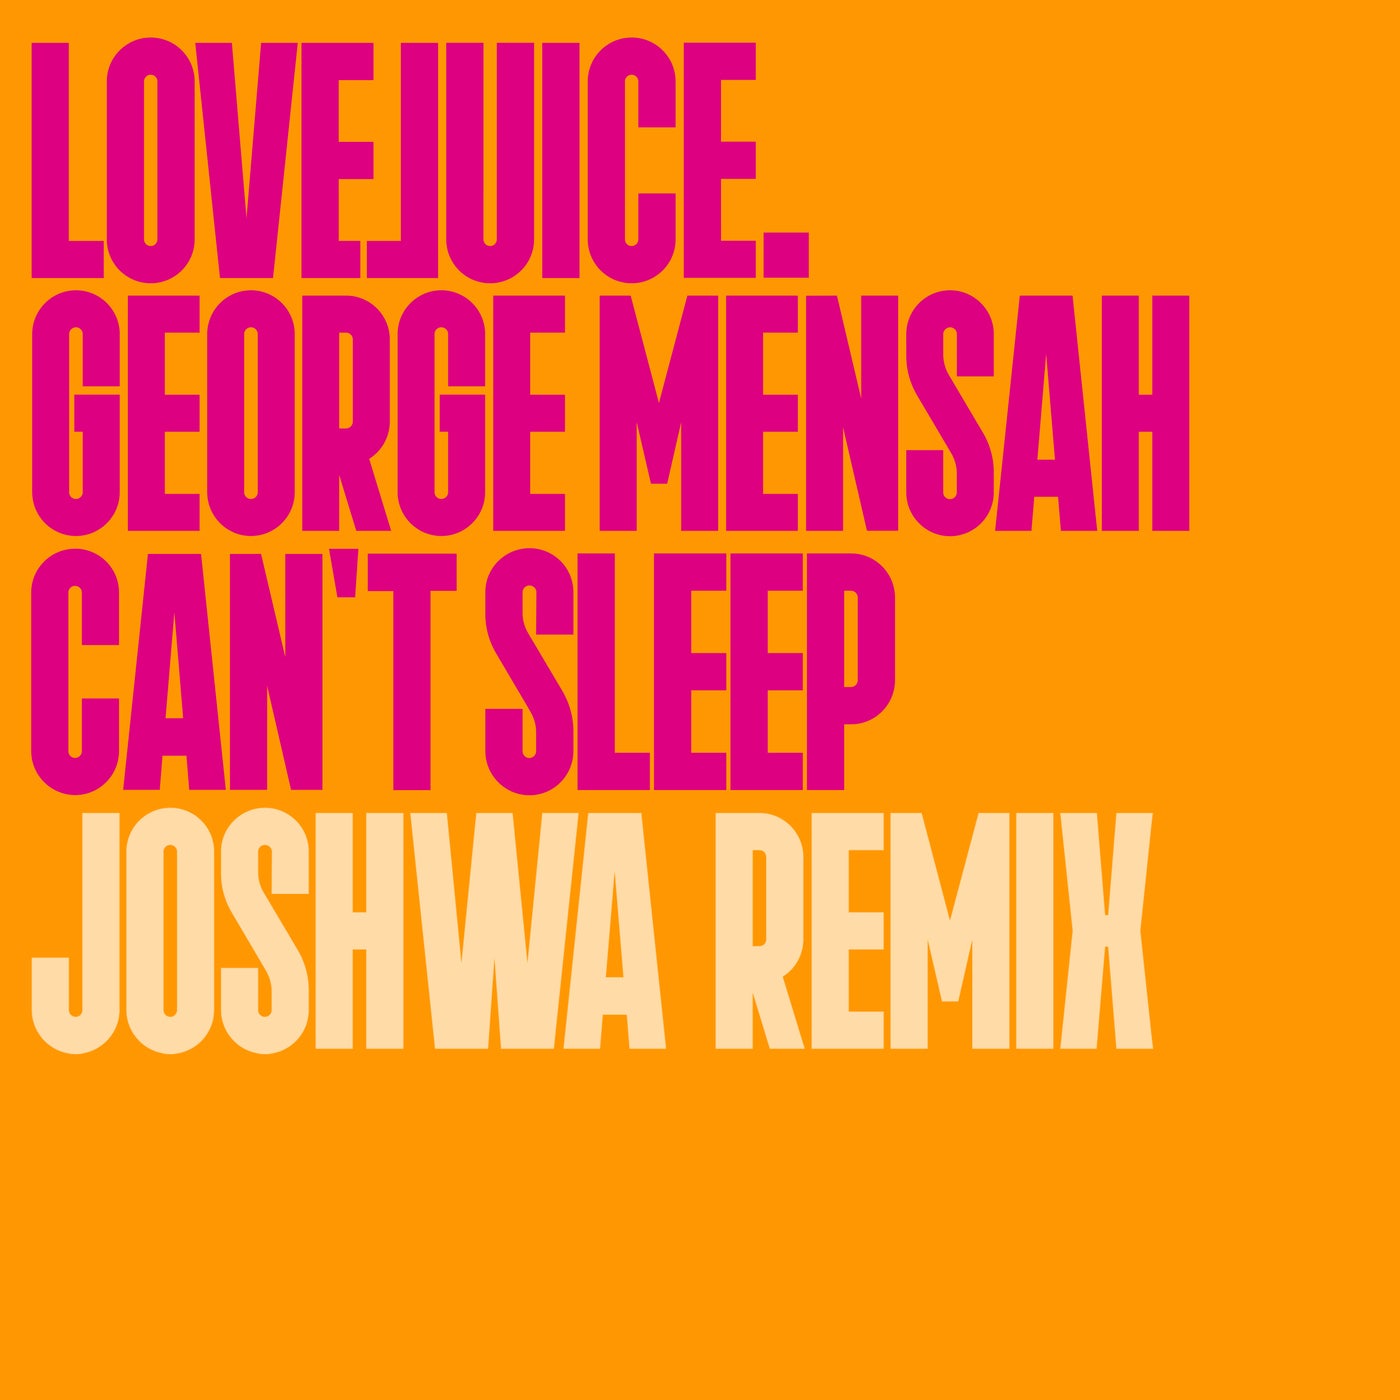 Joshwa (UK), George Mensah – Can’t Sleep (Joshwa Remix) [LJR0034E]